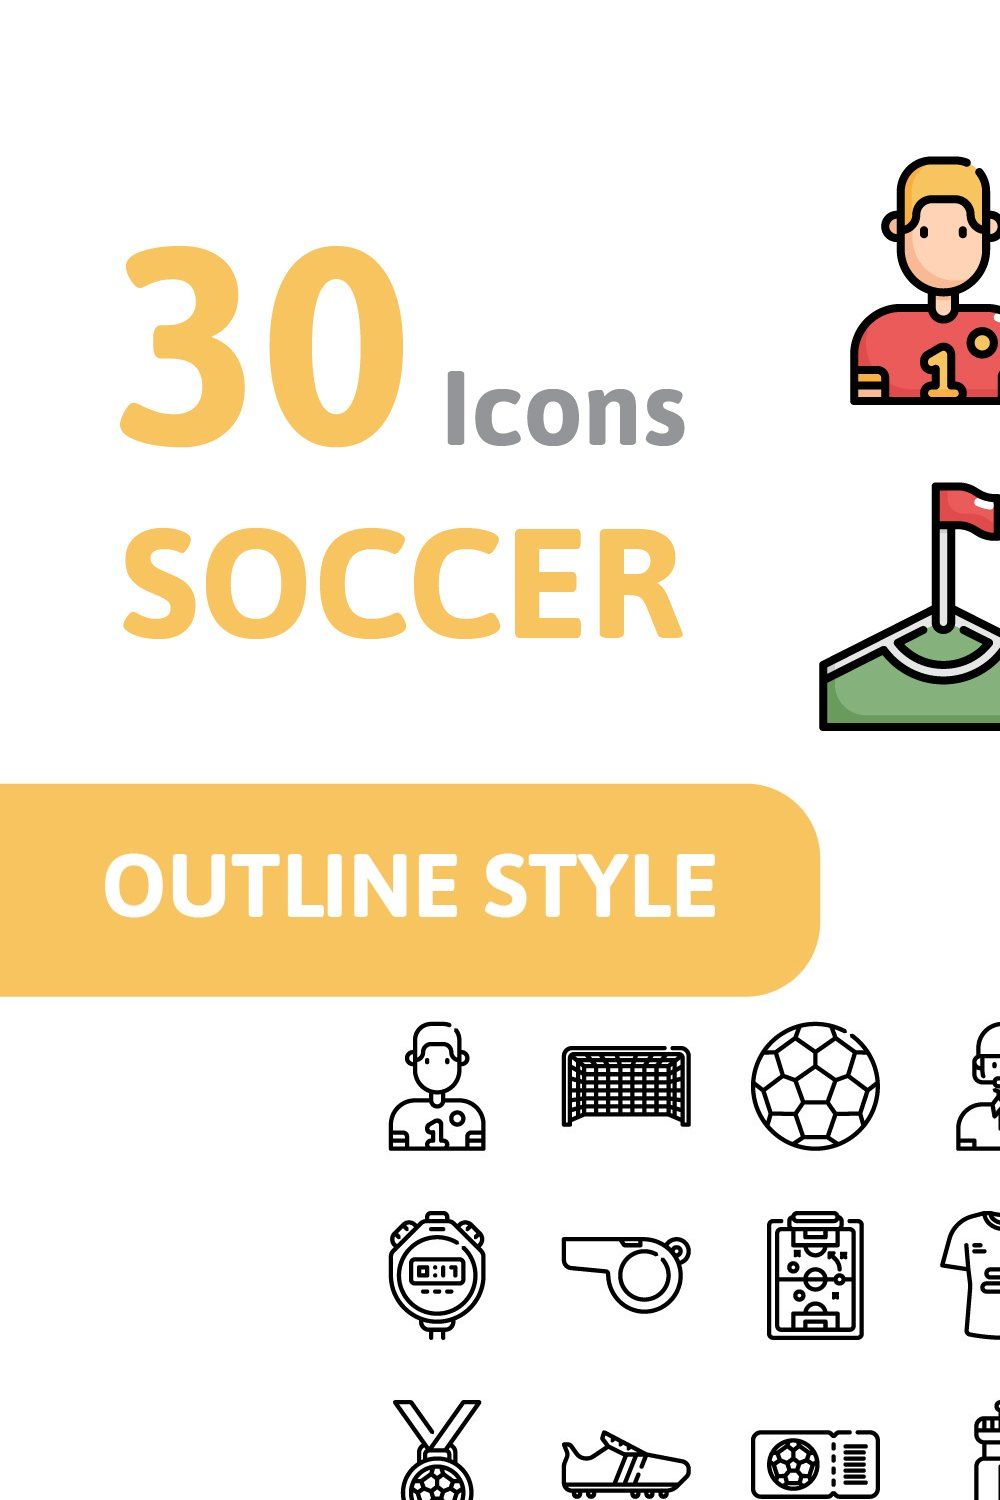 30 Soccer pinterest preview image.